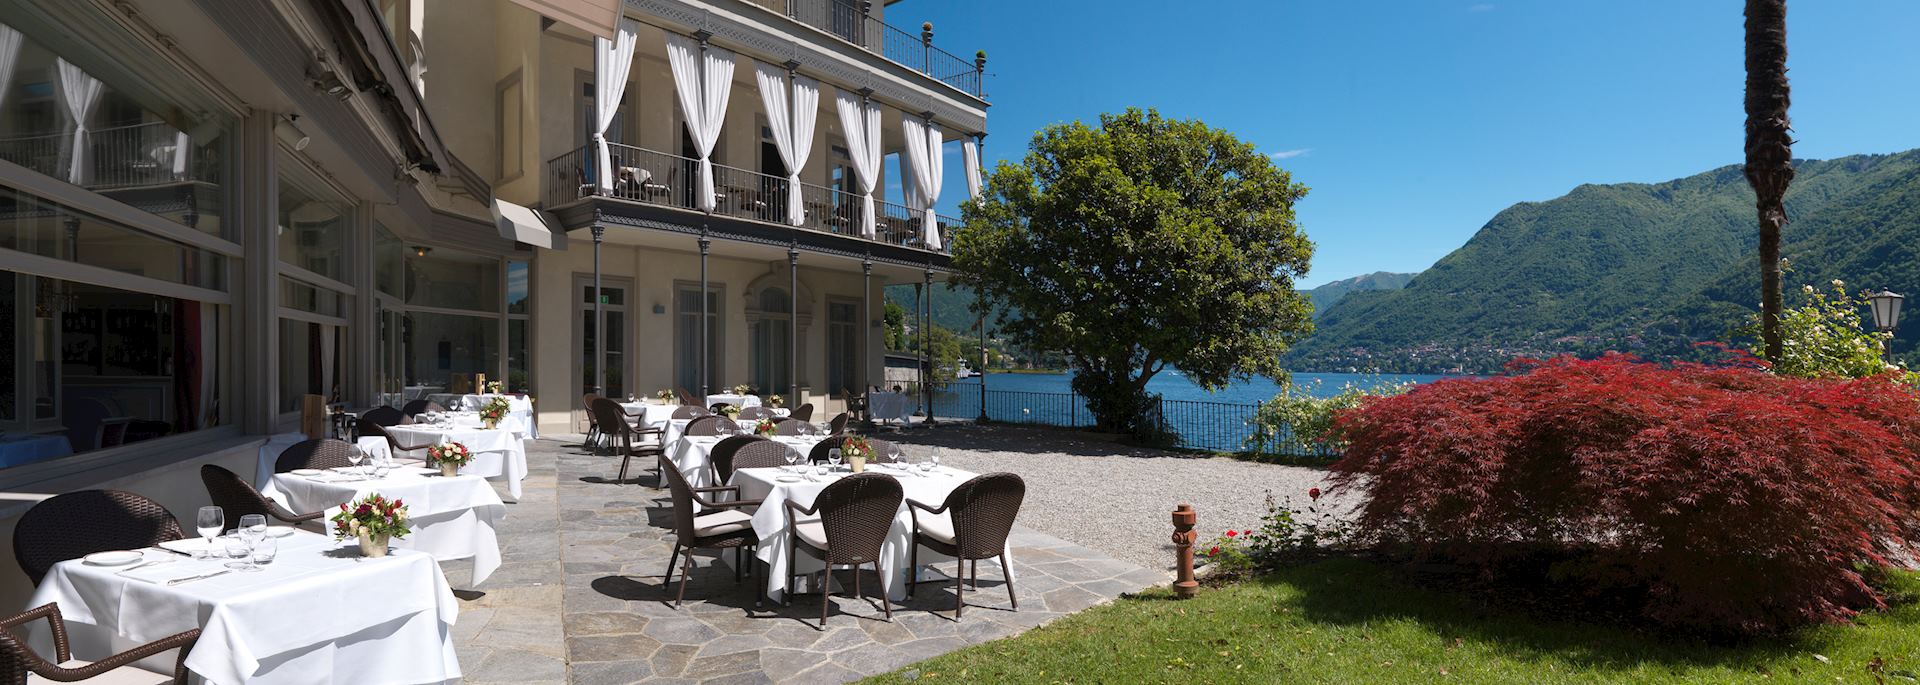 Restaurant terrace, Hotel Villa Flori